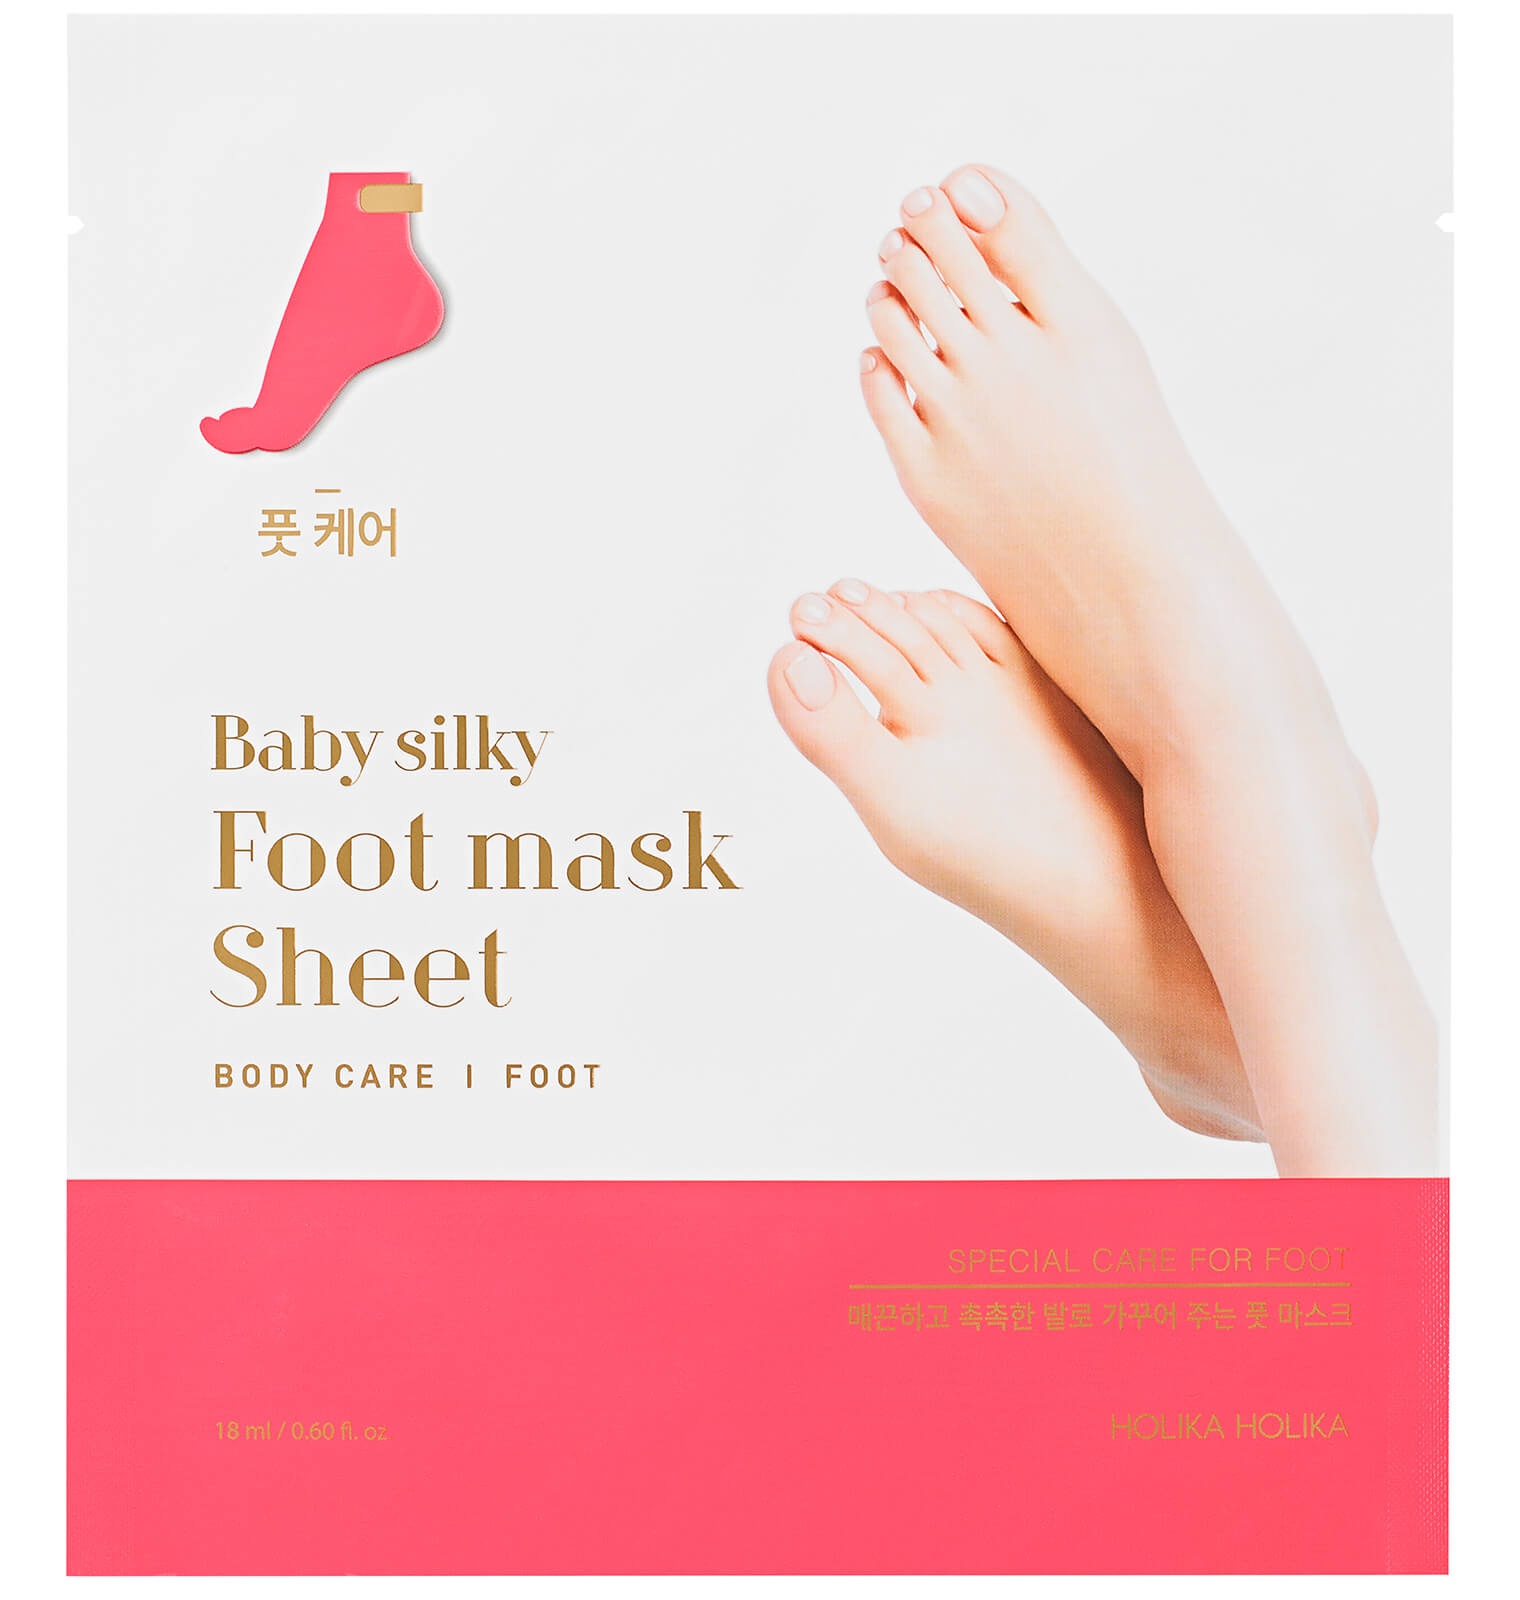 Holika Holika Baby Silky Foot Mask Sheet